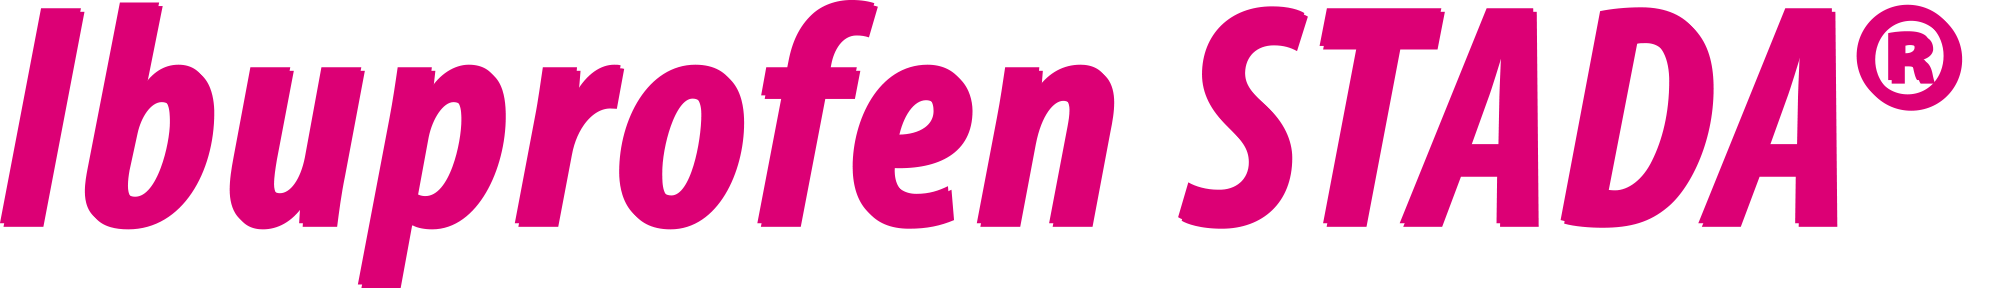 ibuprofen stada logo pink